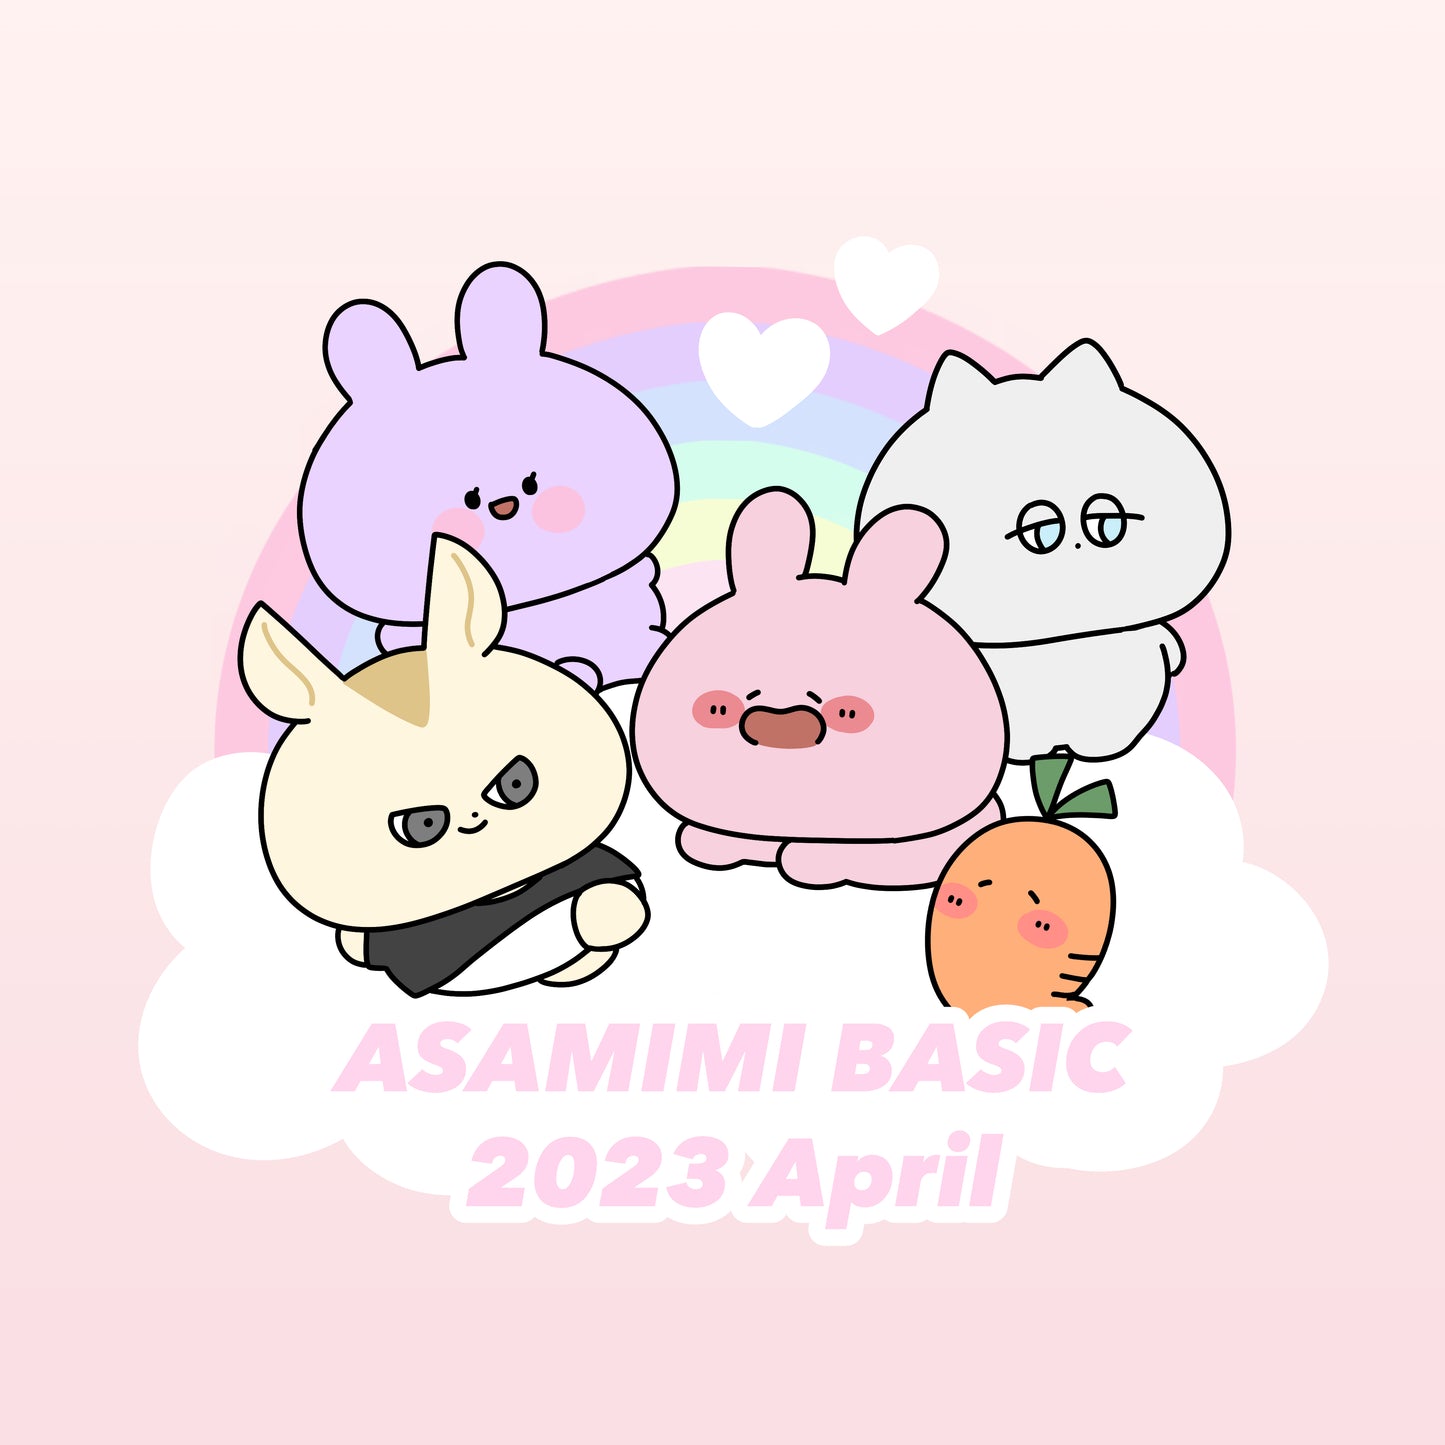 [Asamimi-chan] 髮帶 (Asami BASIC 2023年4月)